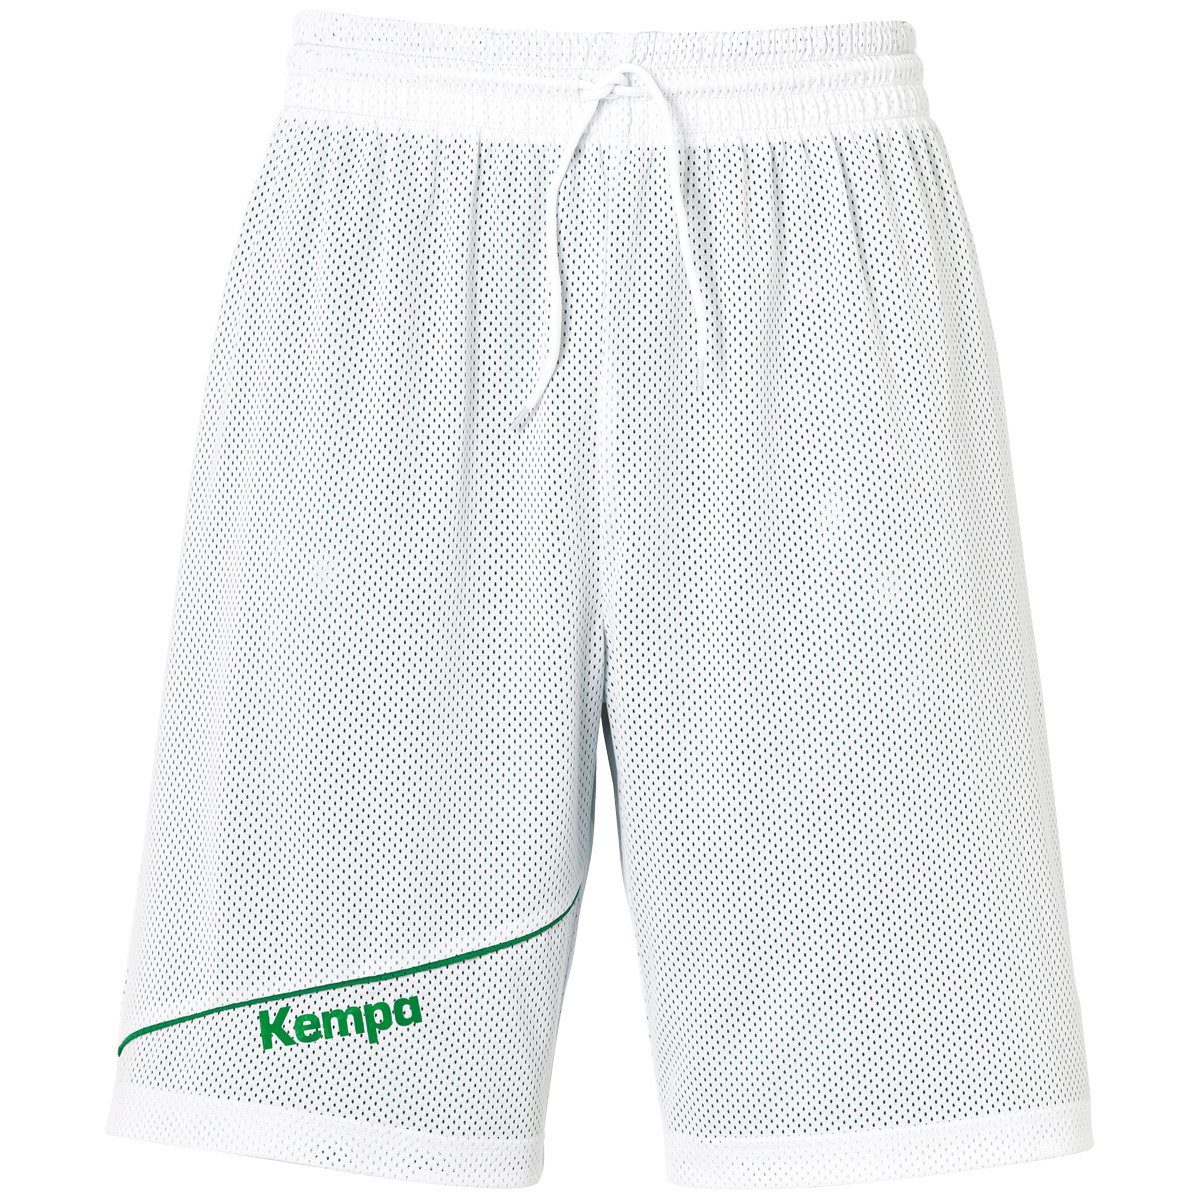 Kempa Shorts REVERSIBLE grün/weiß Shorts Kempa